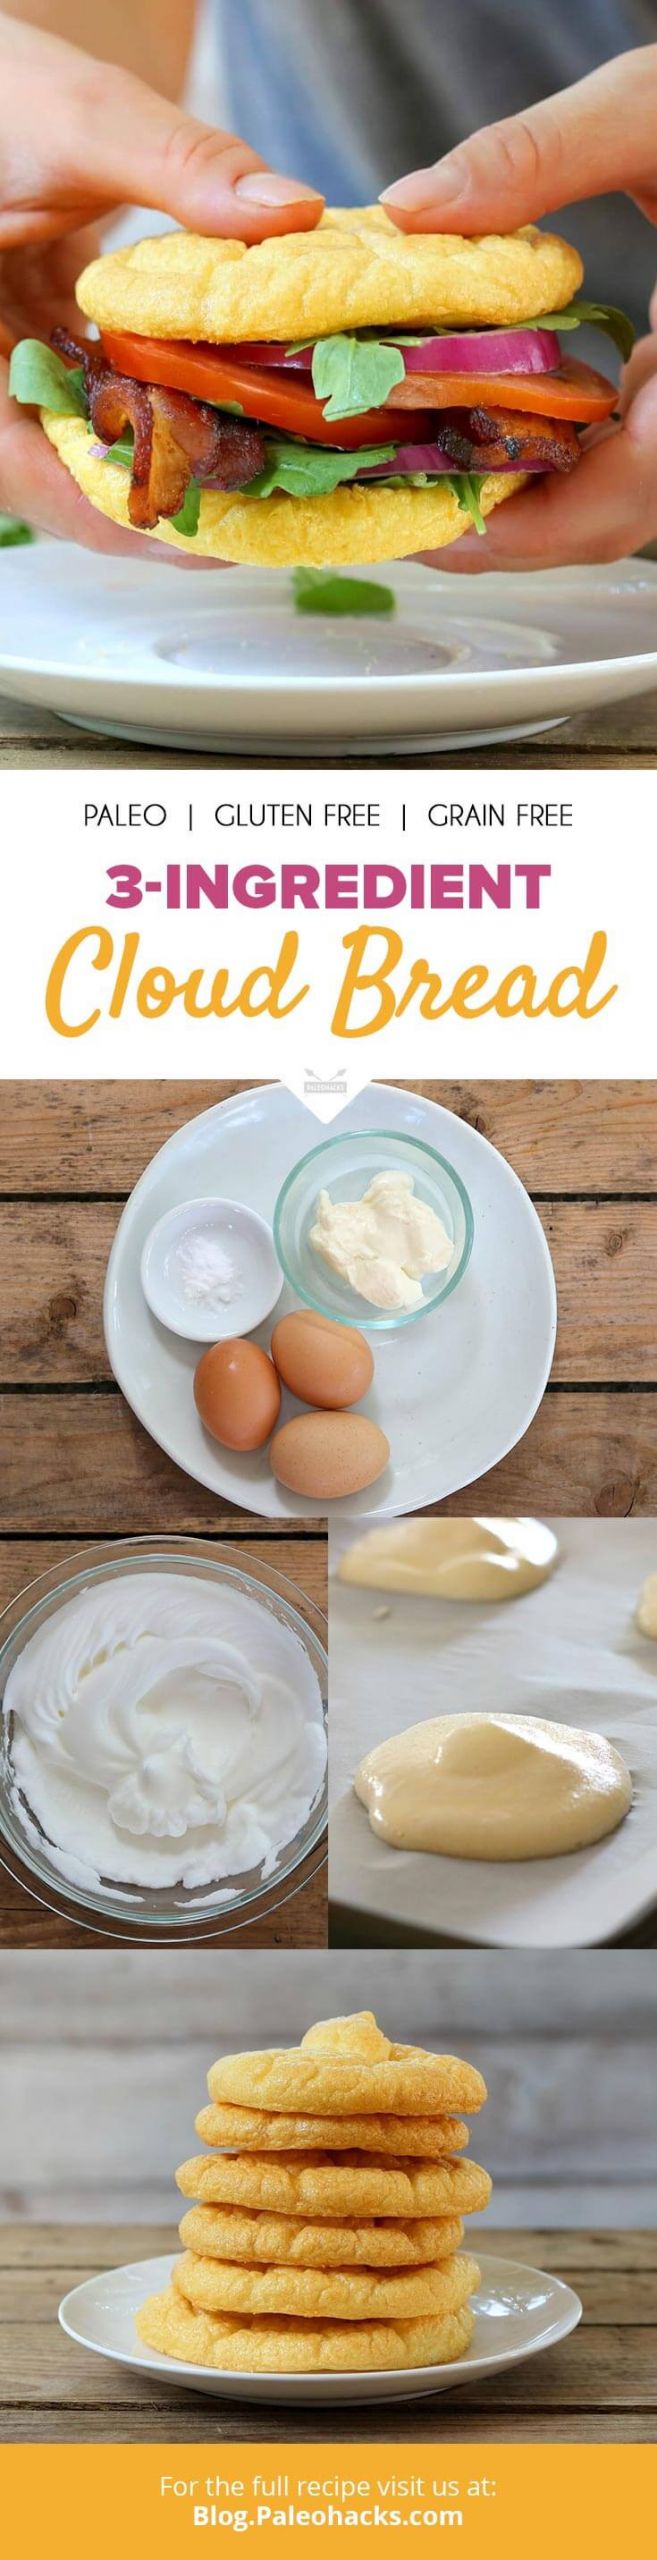 Keto Cloud Bread 3 Ingredient
 3 Ingre nt Cloud Bread Recipe